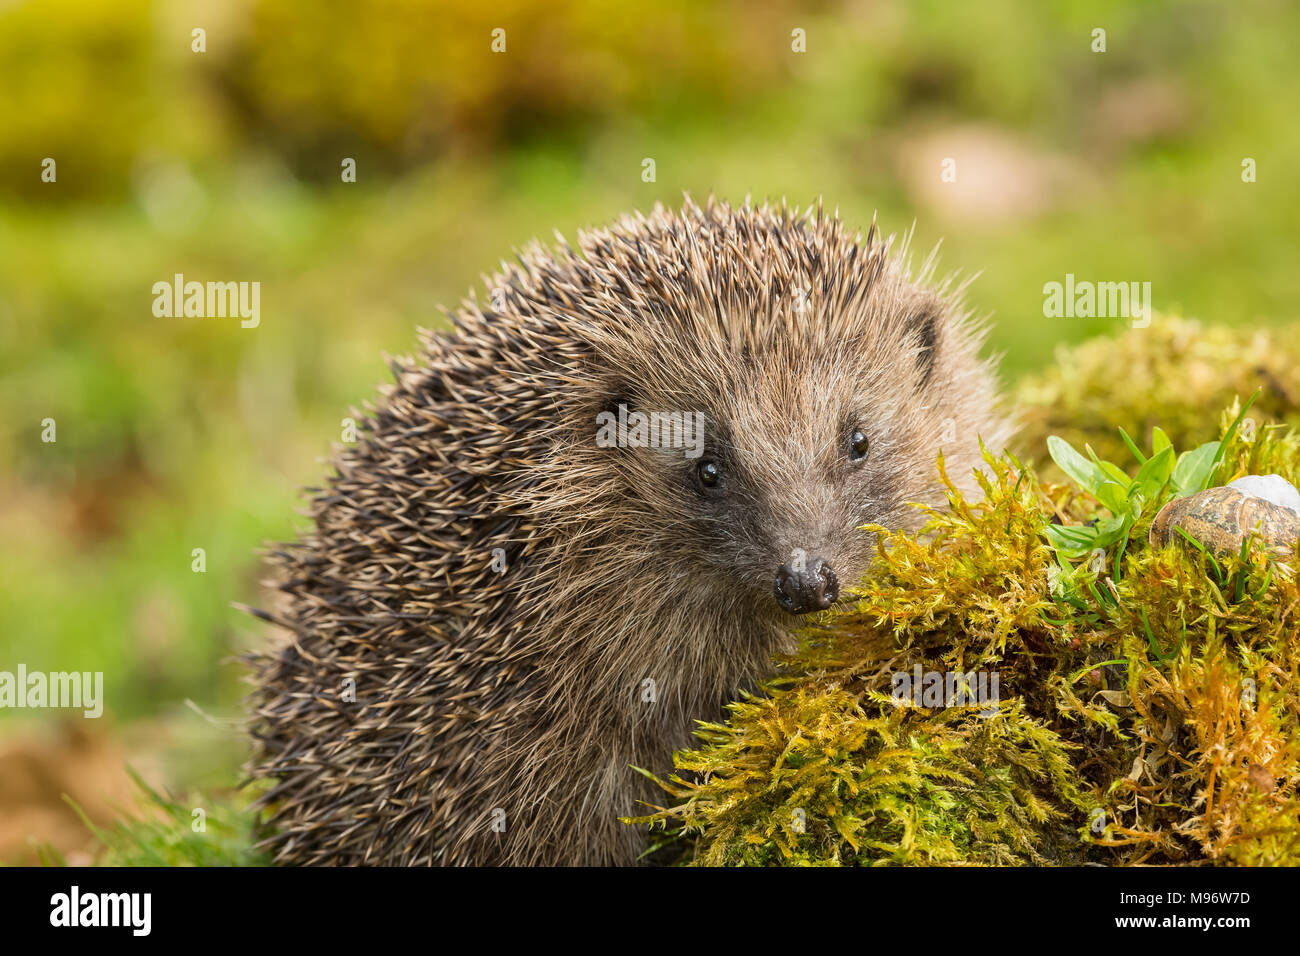 Hedgehog, wild, native, European hedgehog on green moss with blurred background.  Erinaceus europaeus.  Landscape. Stock Photo